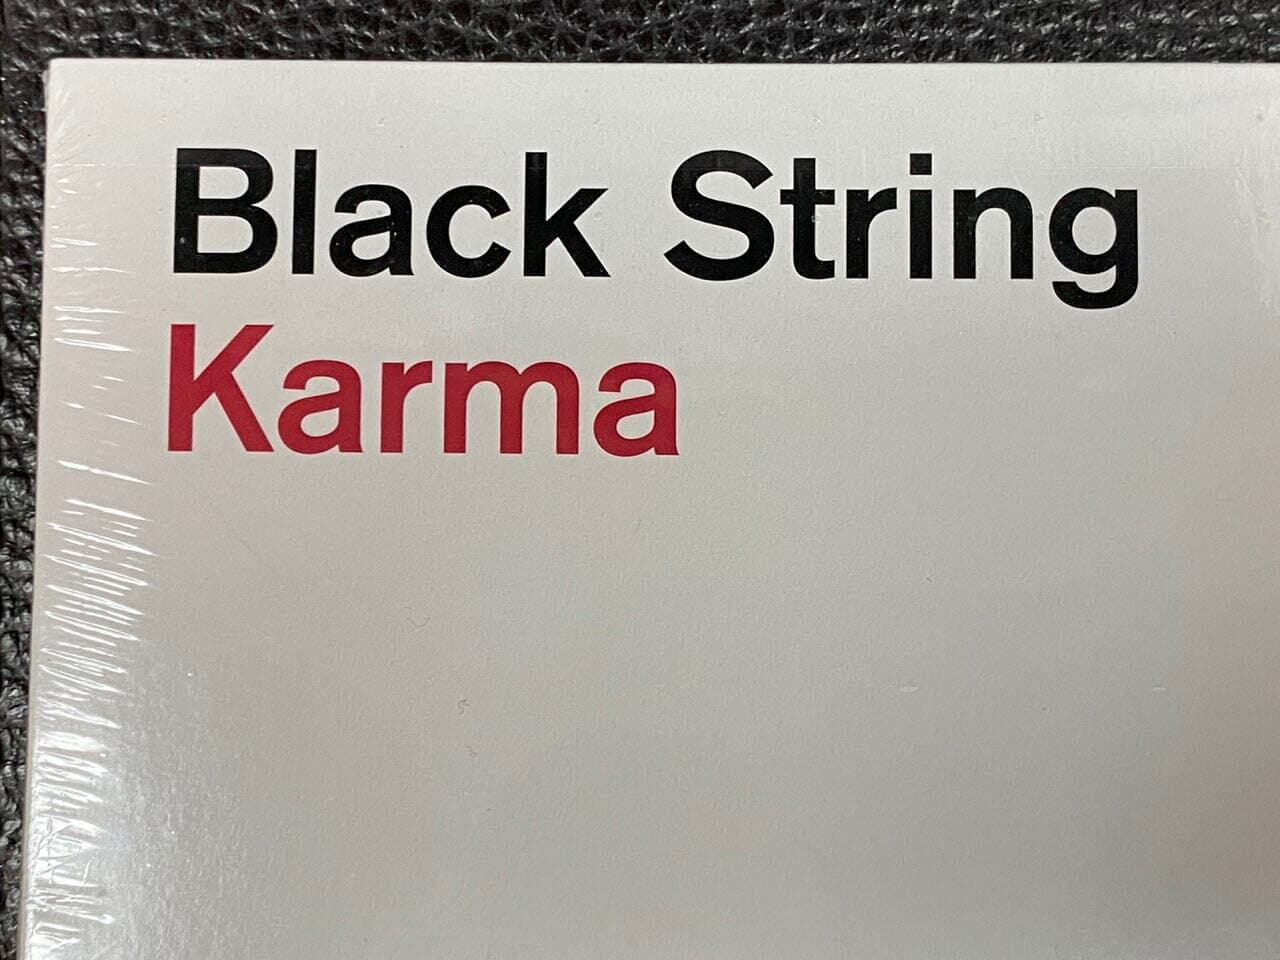 [LP] 블랙 스트링 - Black String - Karma LP [미개봉] [독일반]